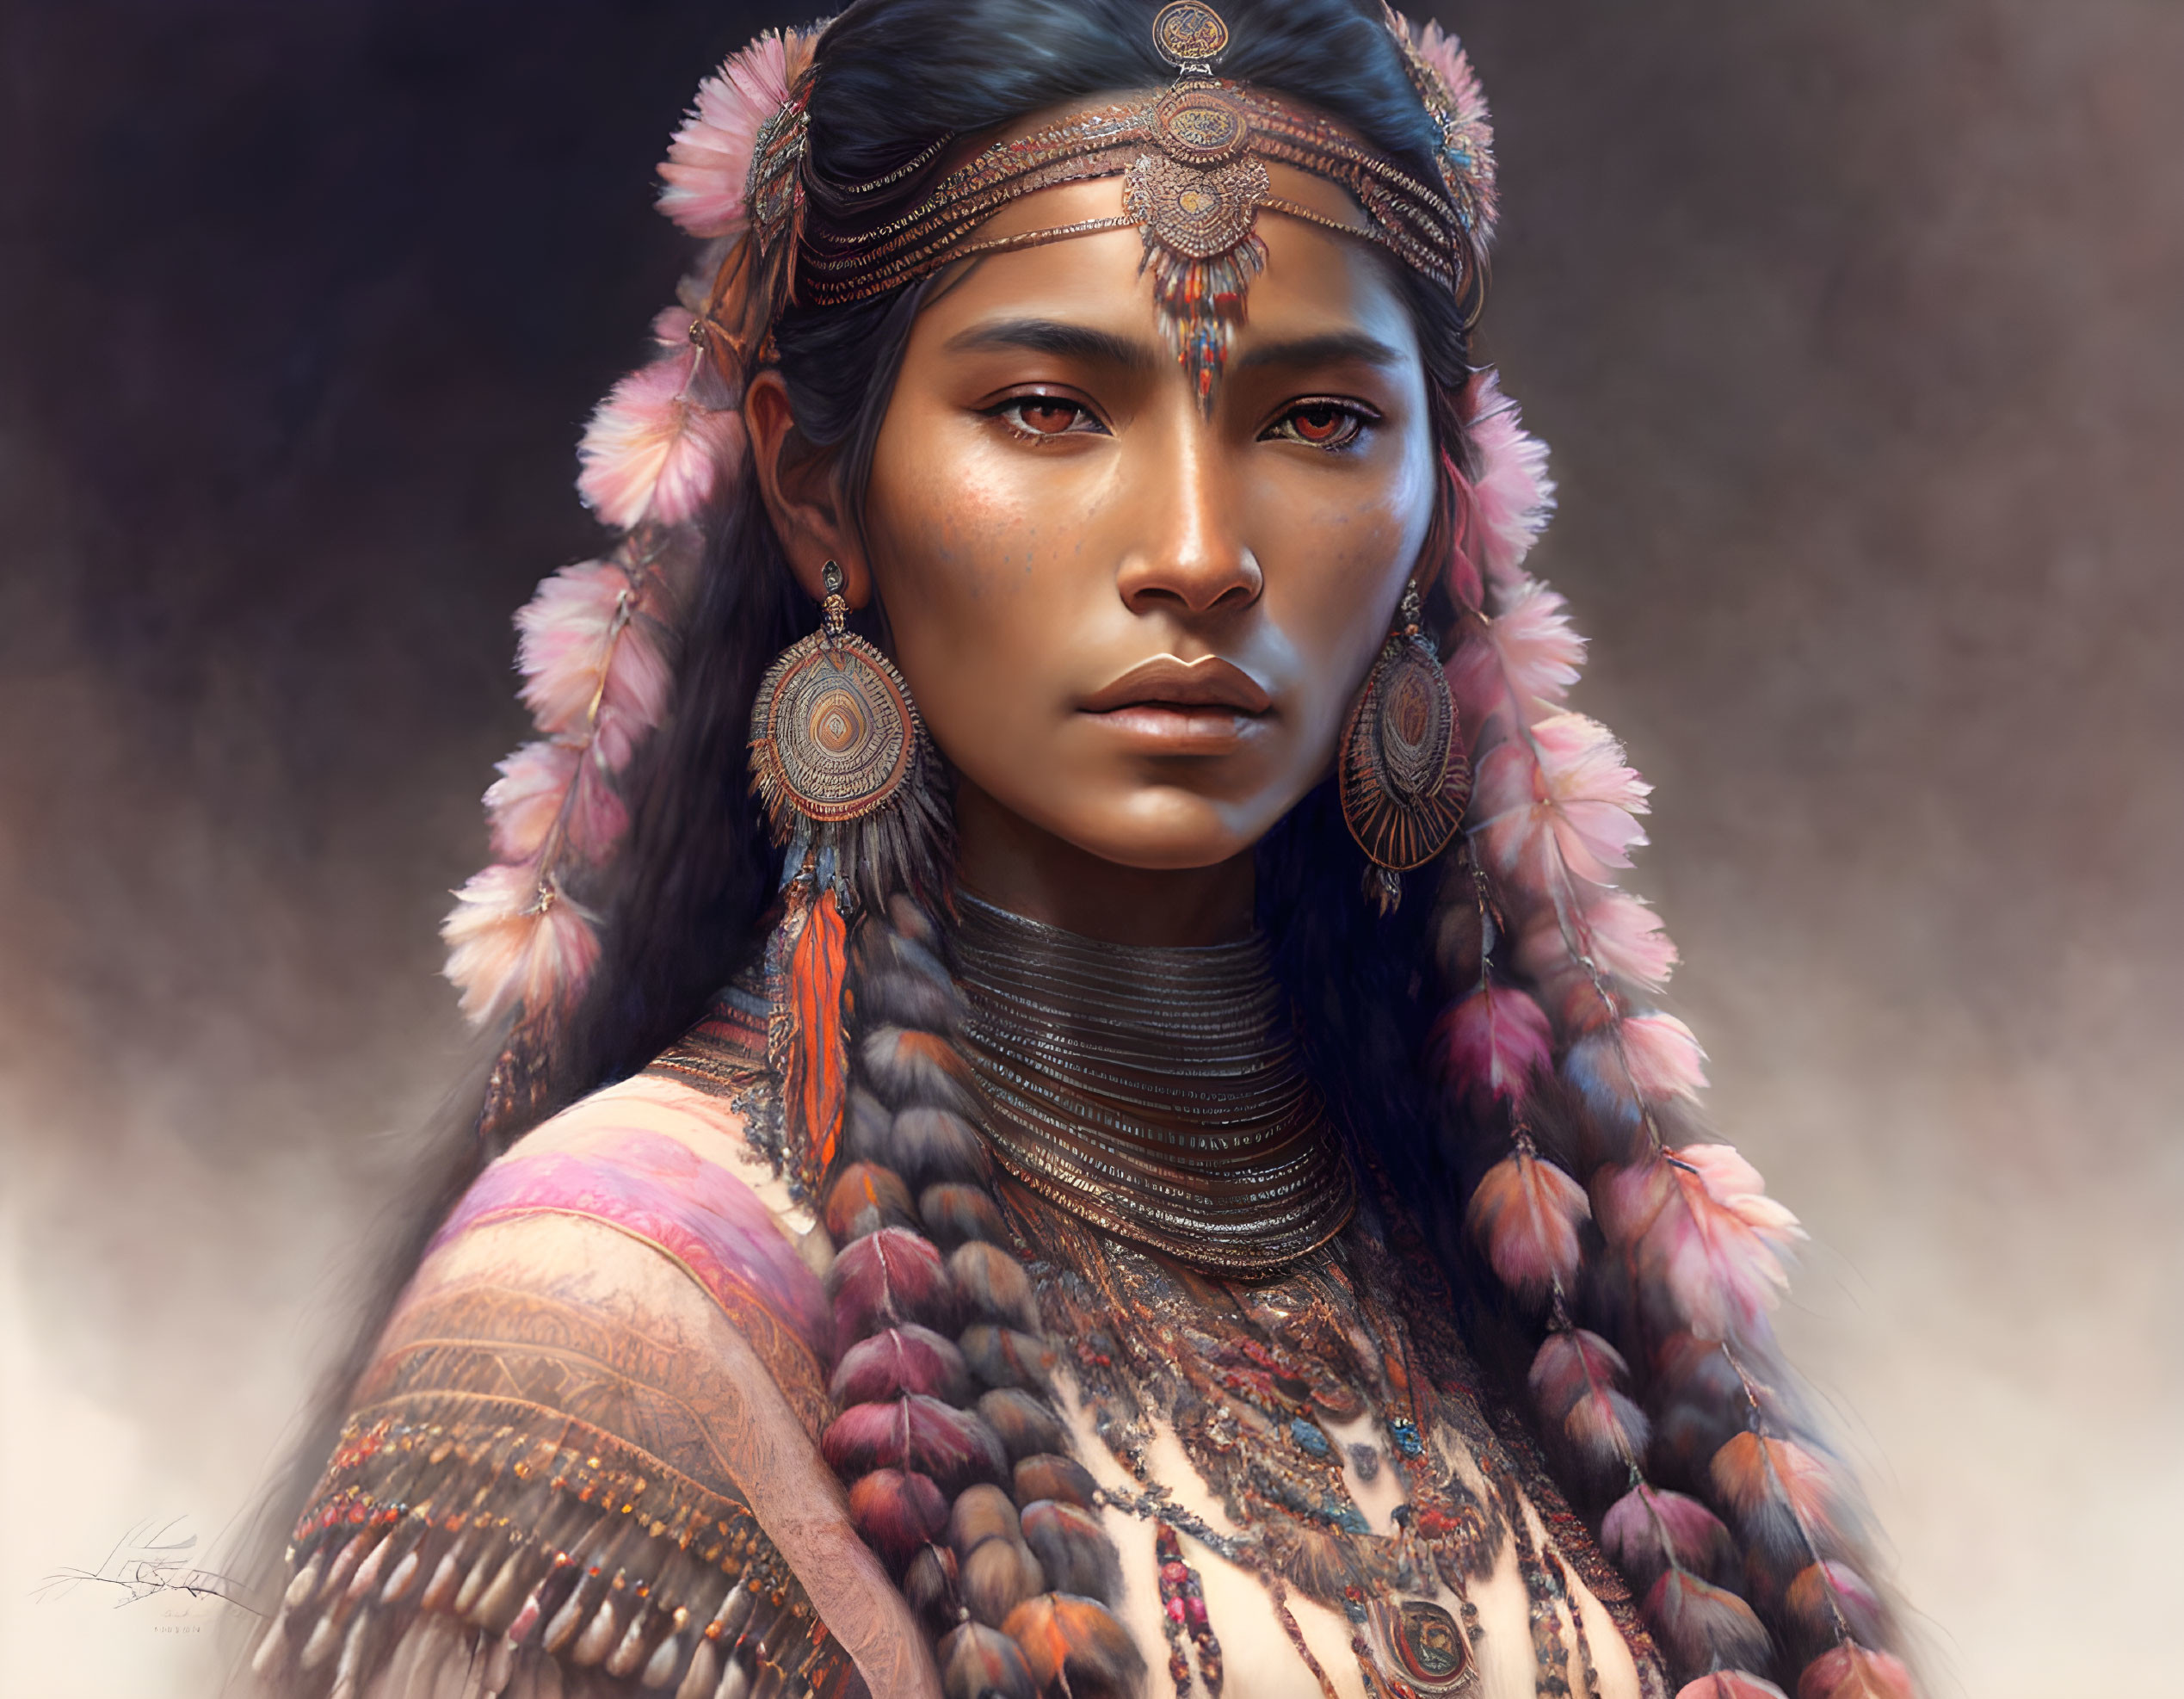 Beautiful native american woman